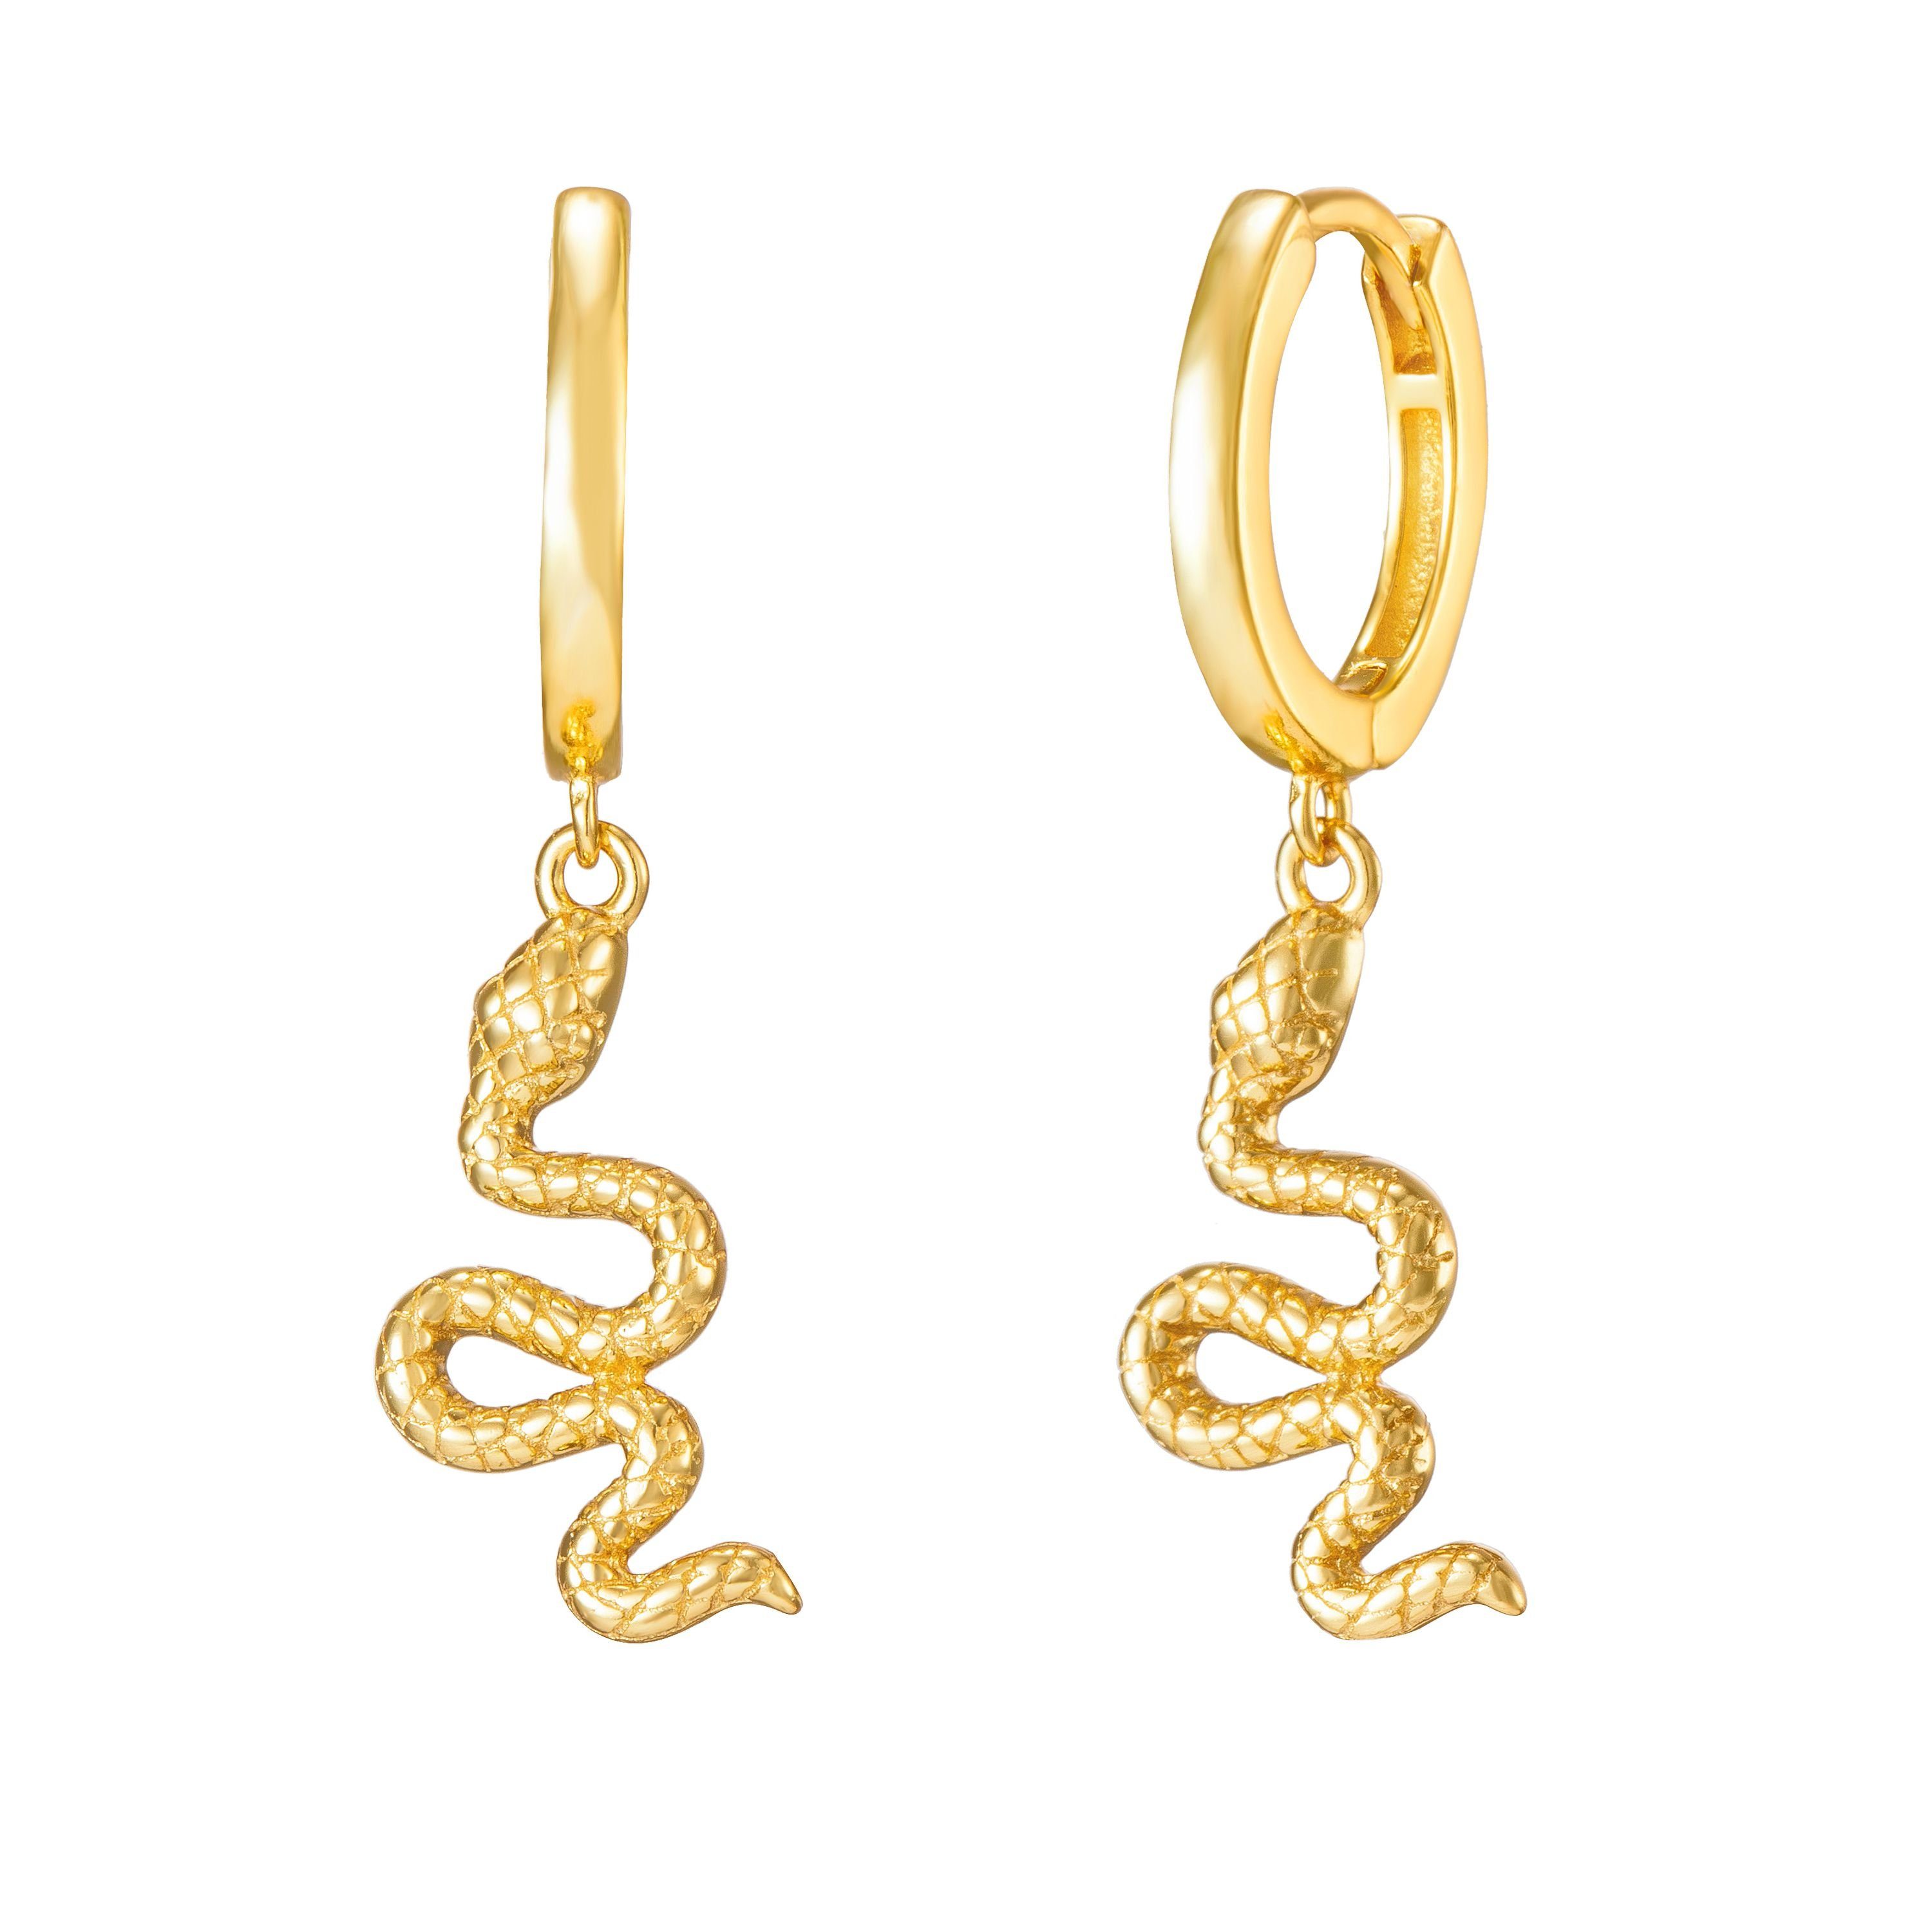 Brandlinger Culebra, 925 Schlangen Ohrringe Ohrhänger Silber vergoldet Paar